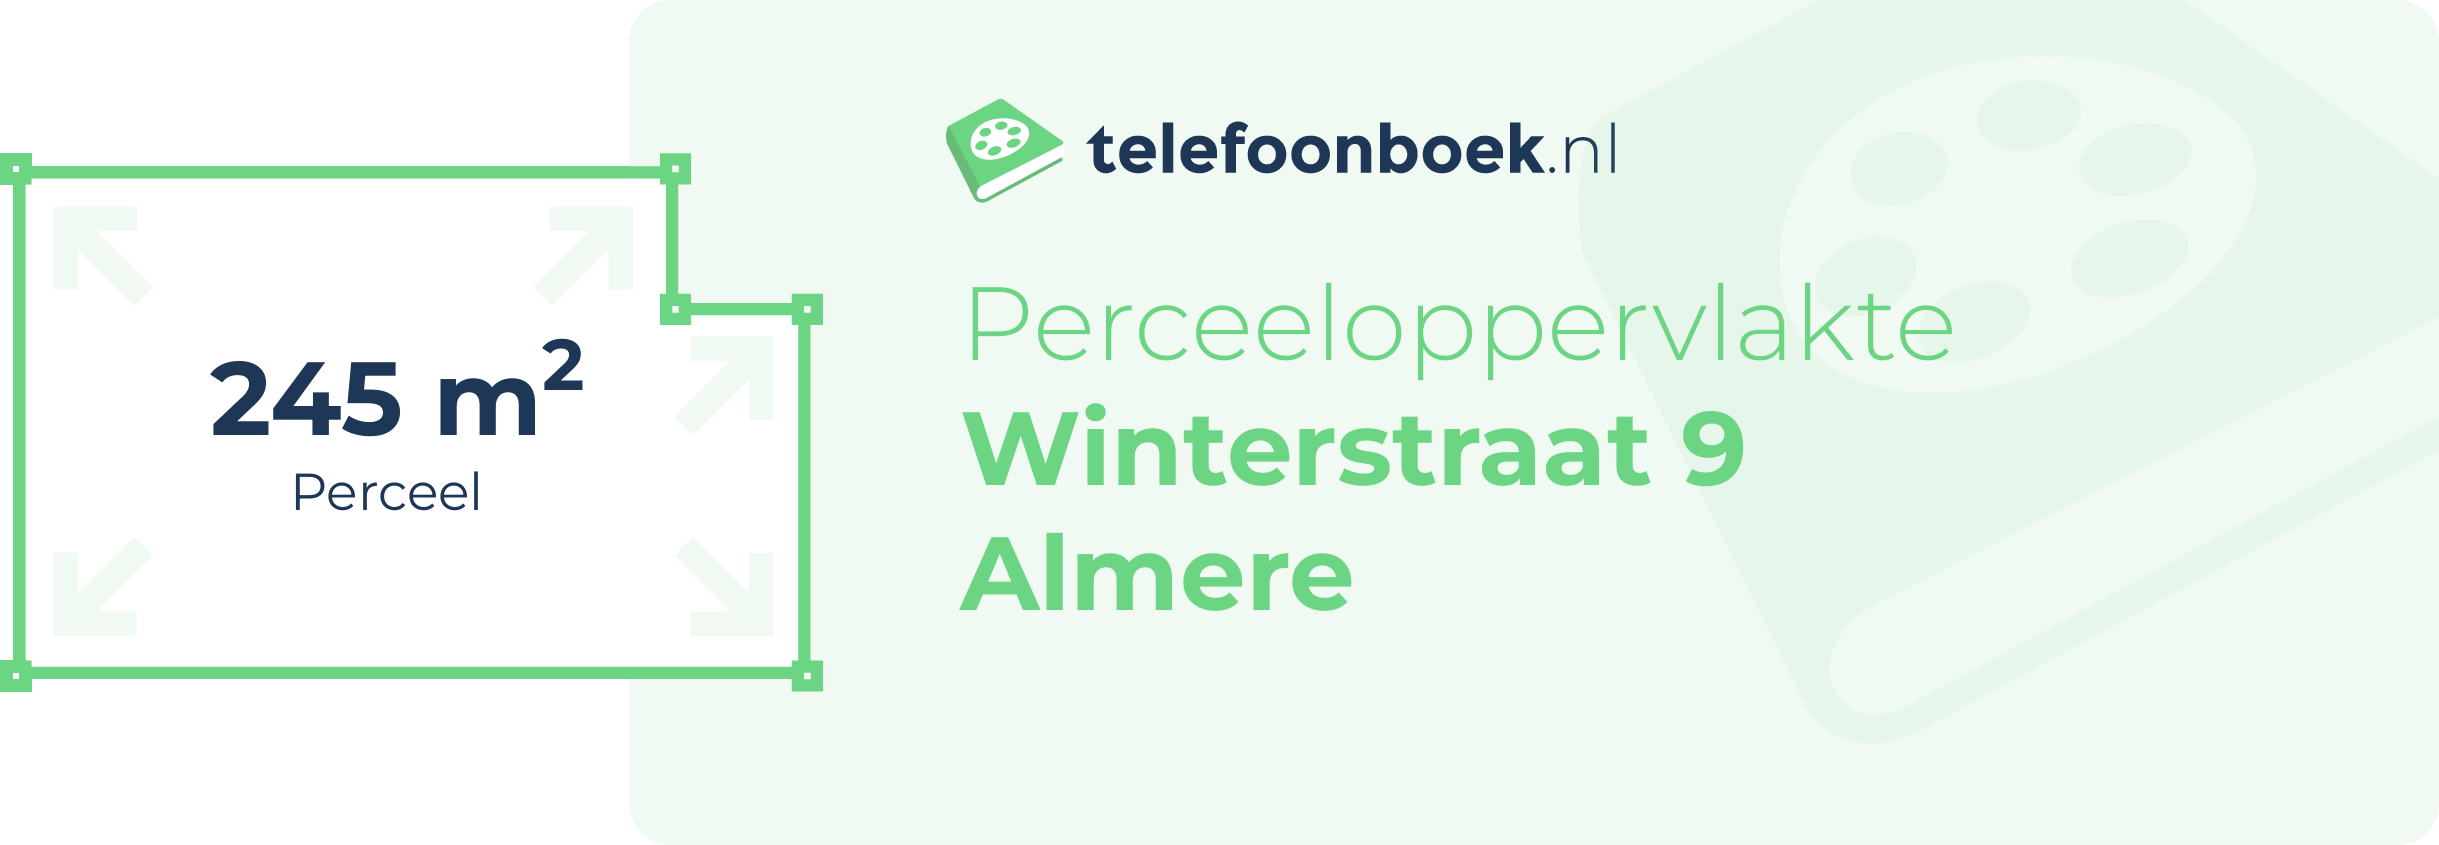 Perceeloppervlakte Winterstraat 9 Almere